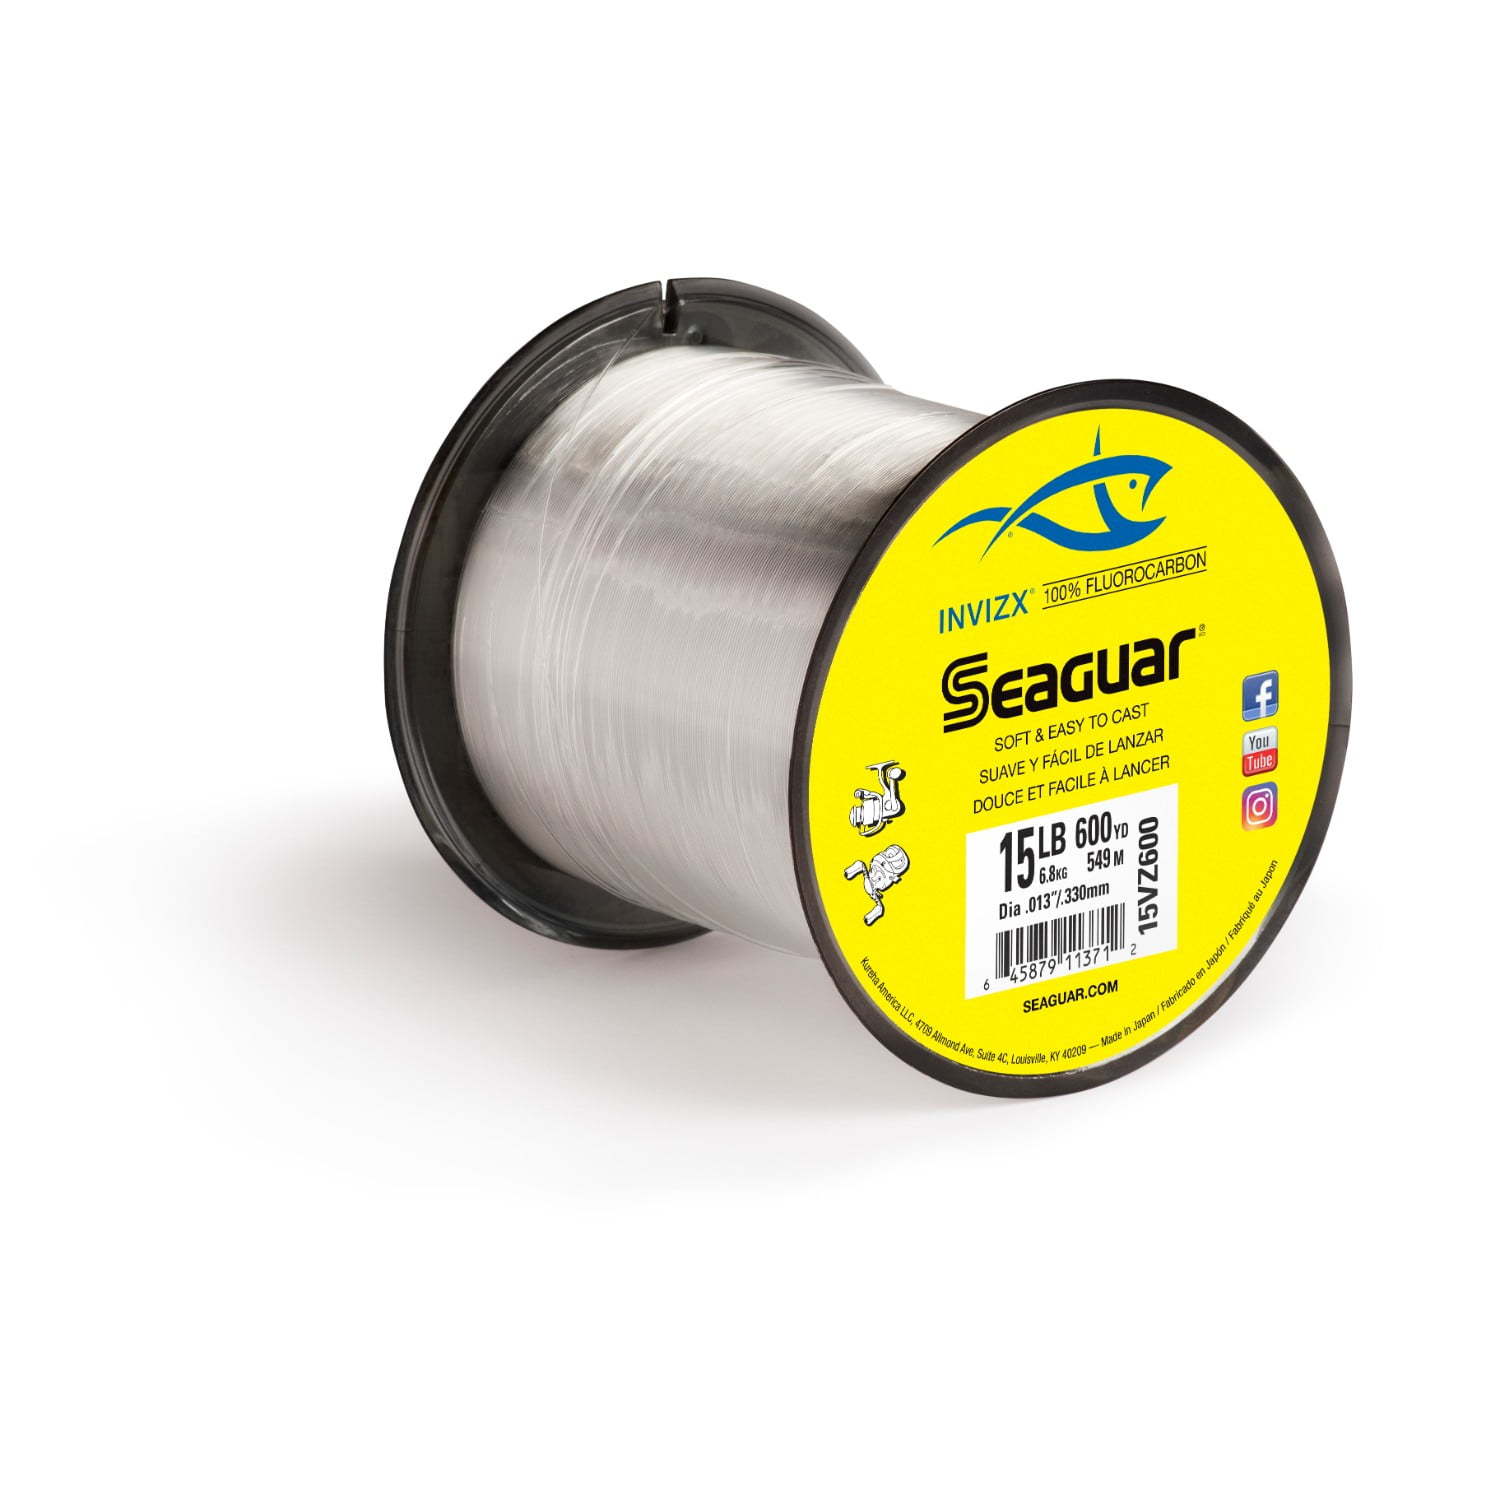 Seaguar InvizX Freshwater 100% Fluorocarbon Fishing Line 15lbs, 600yds  Break Strength/Length - 15VZ600 